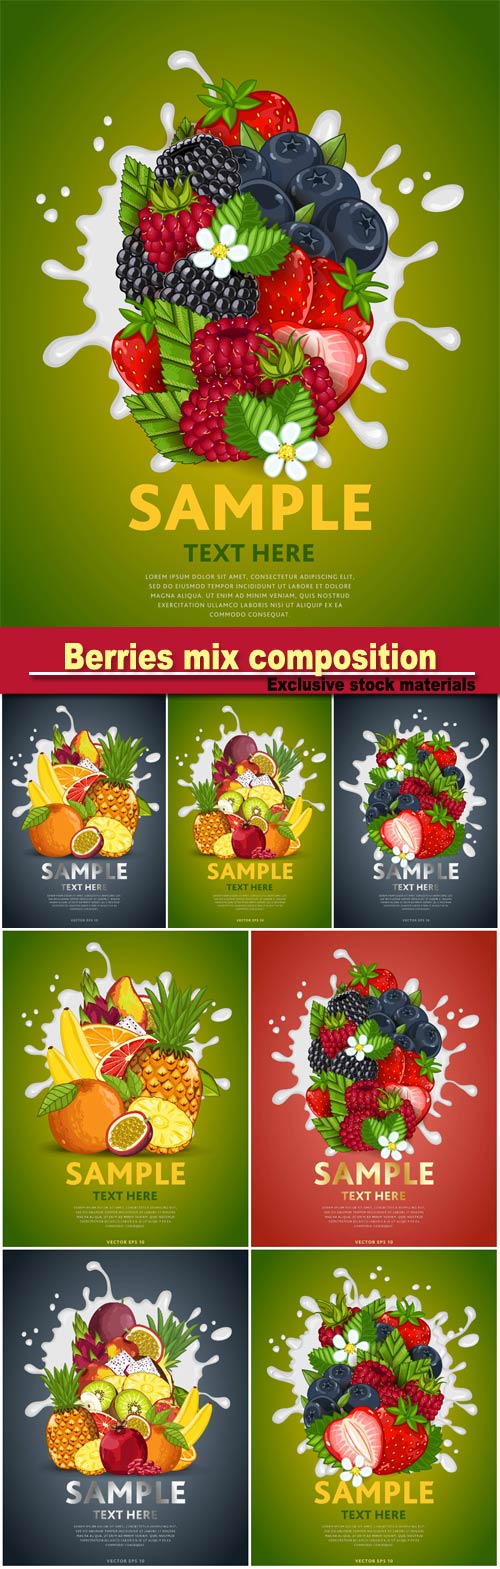 Berries mix composition in milk splash vector illustration